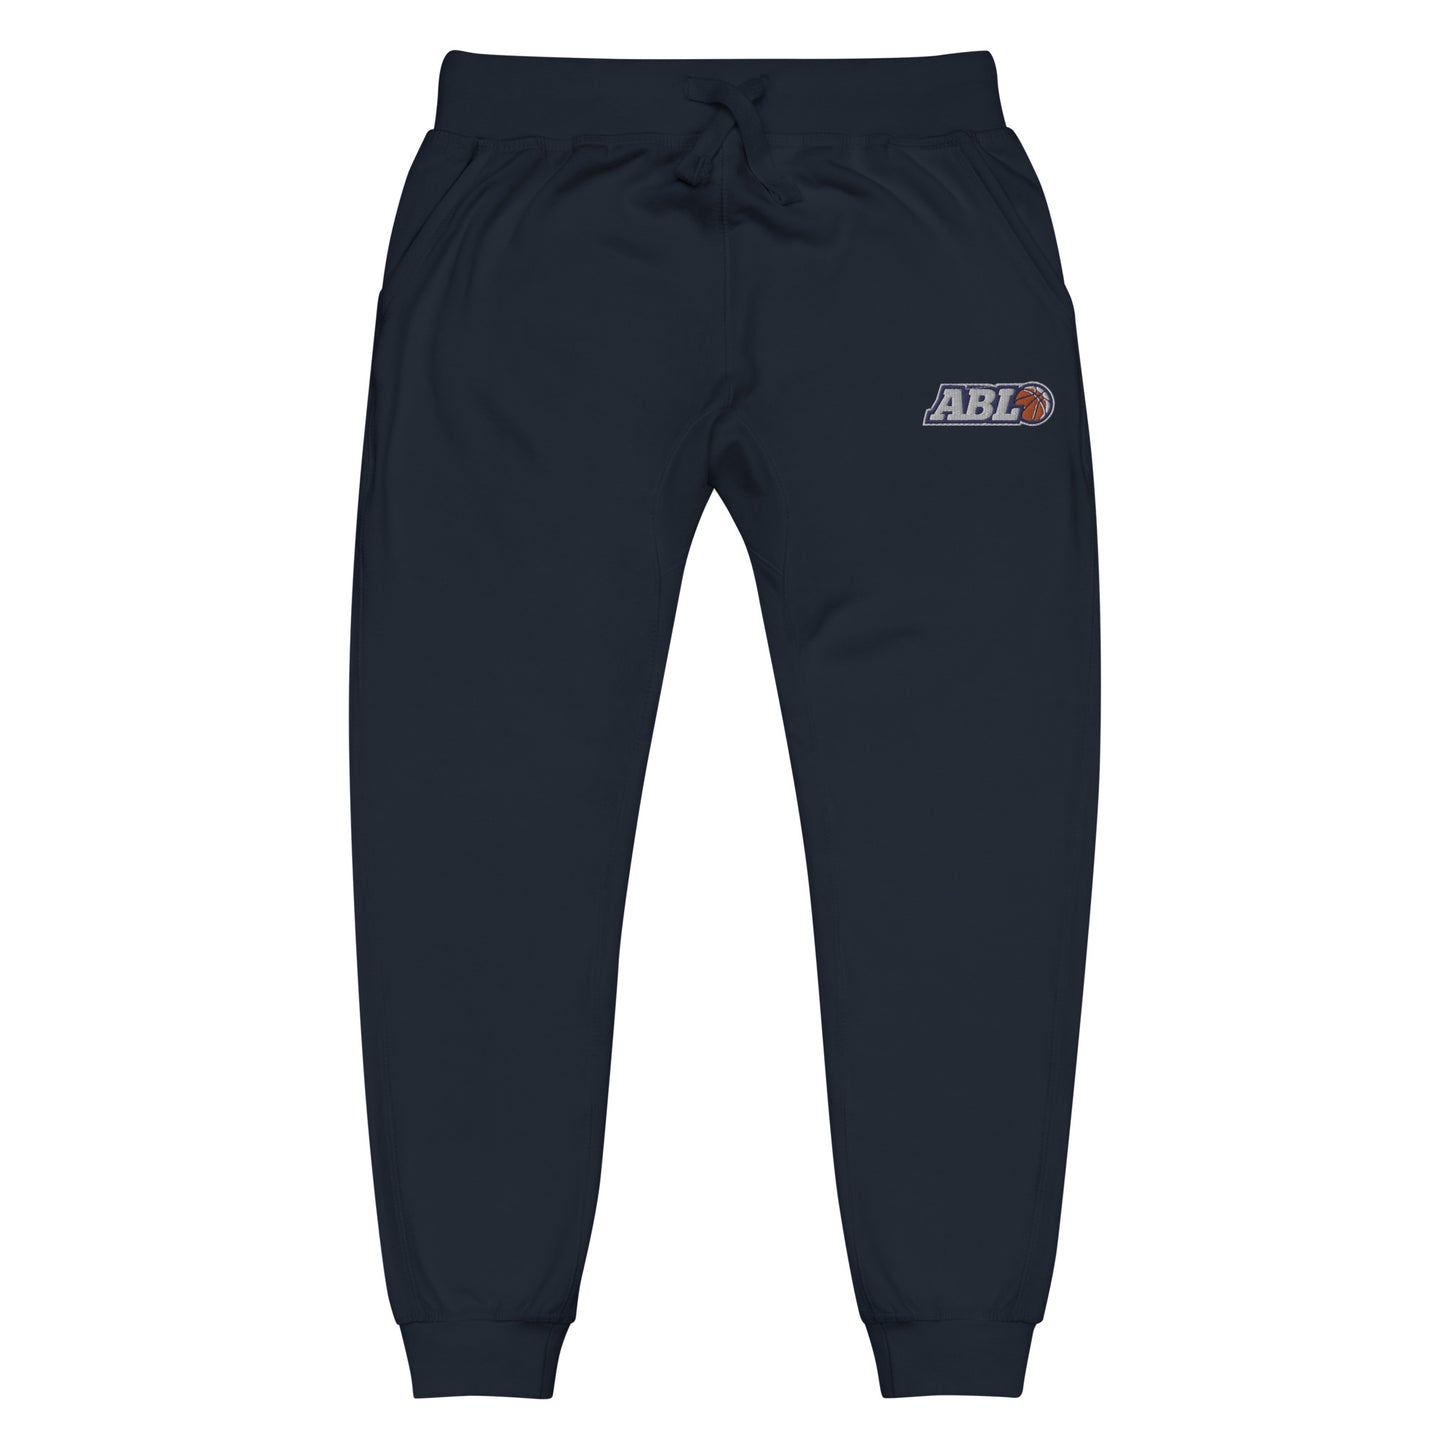 ABL Unisex fleece sweatpants